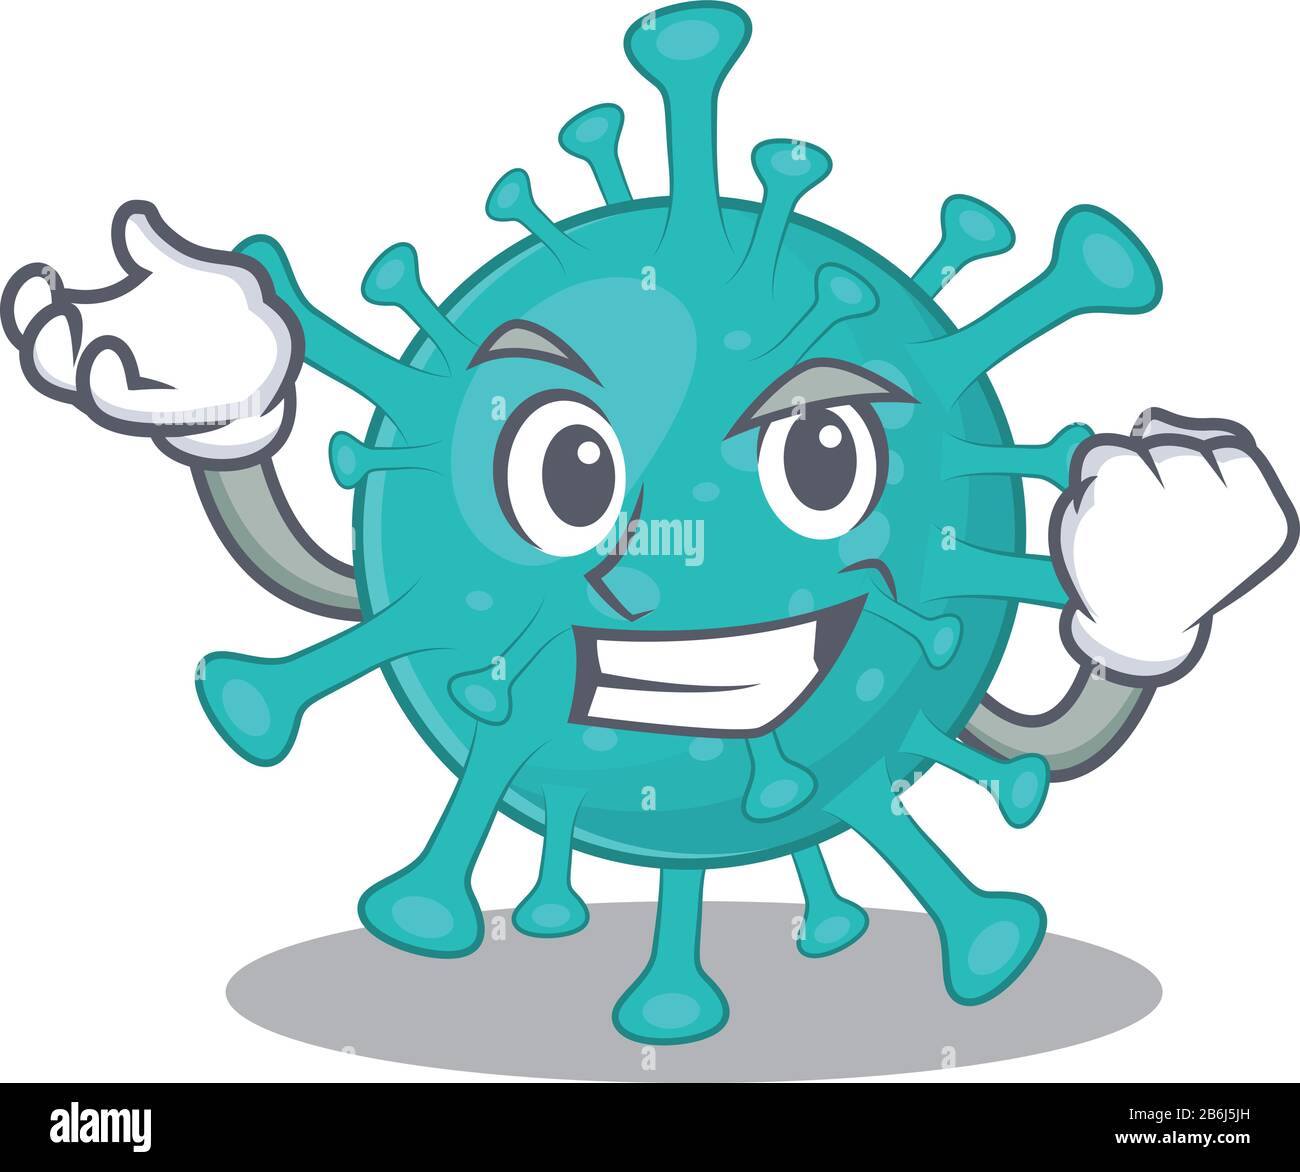 Corona zygote virus cartoon character style with happy face Stock Vector